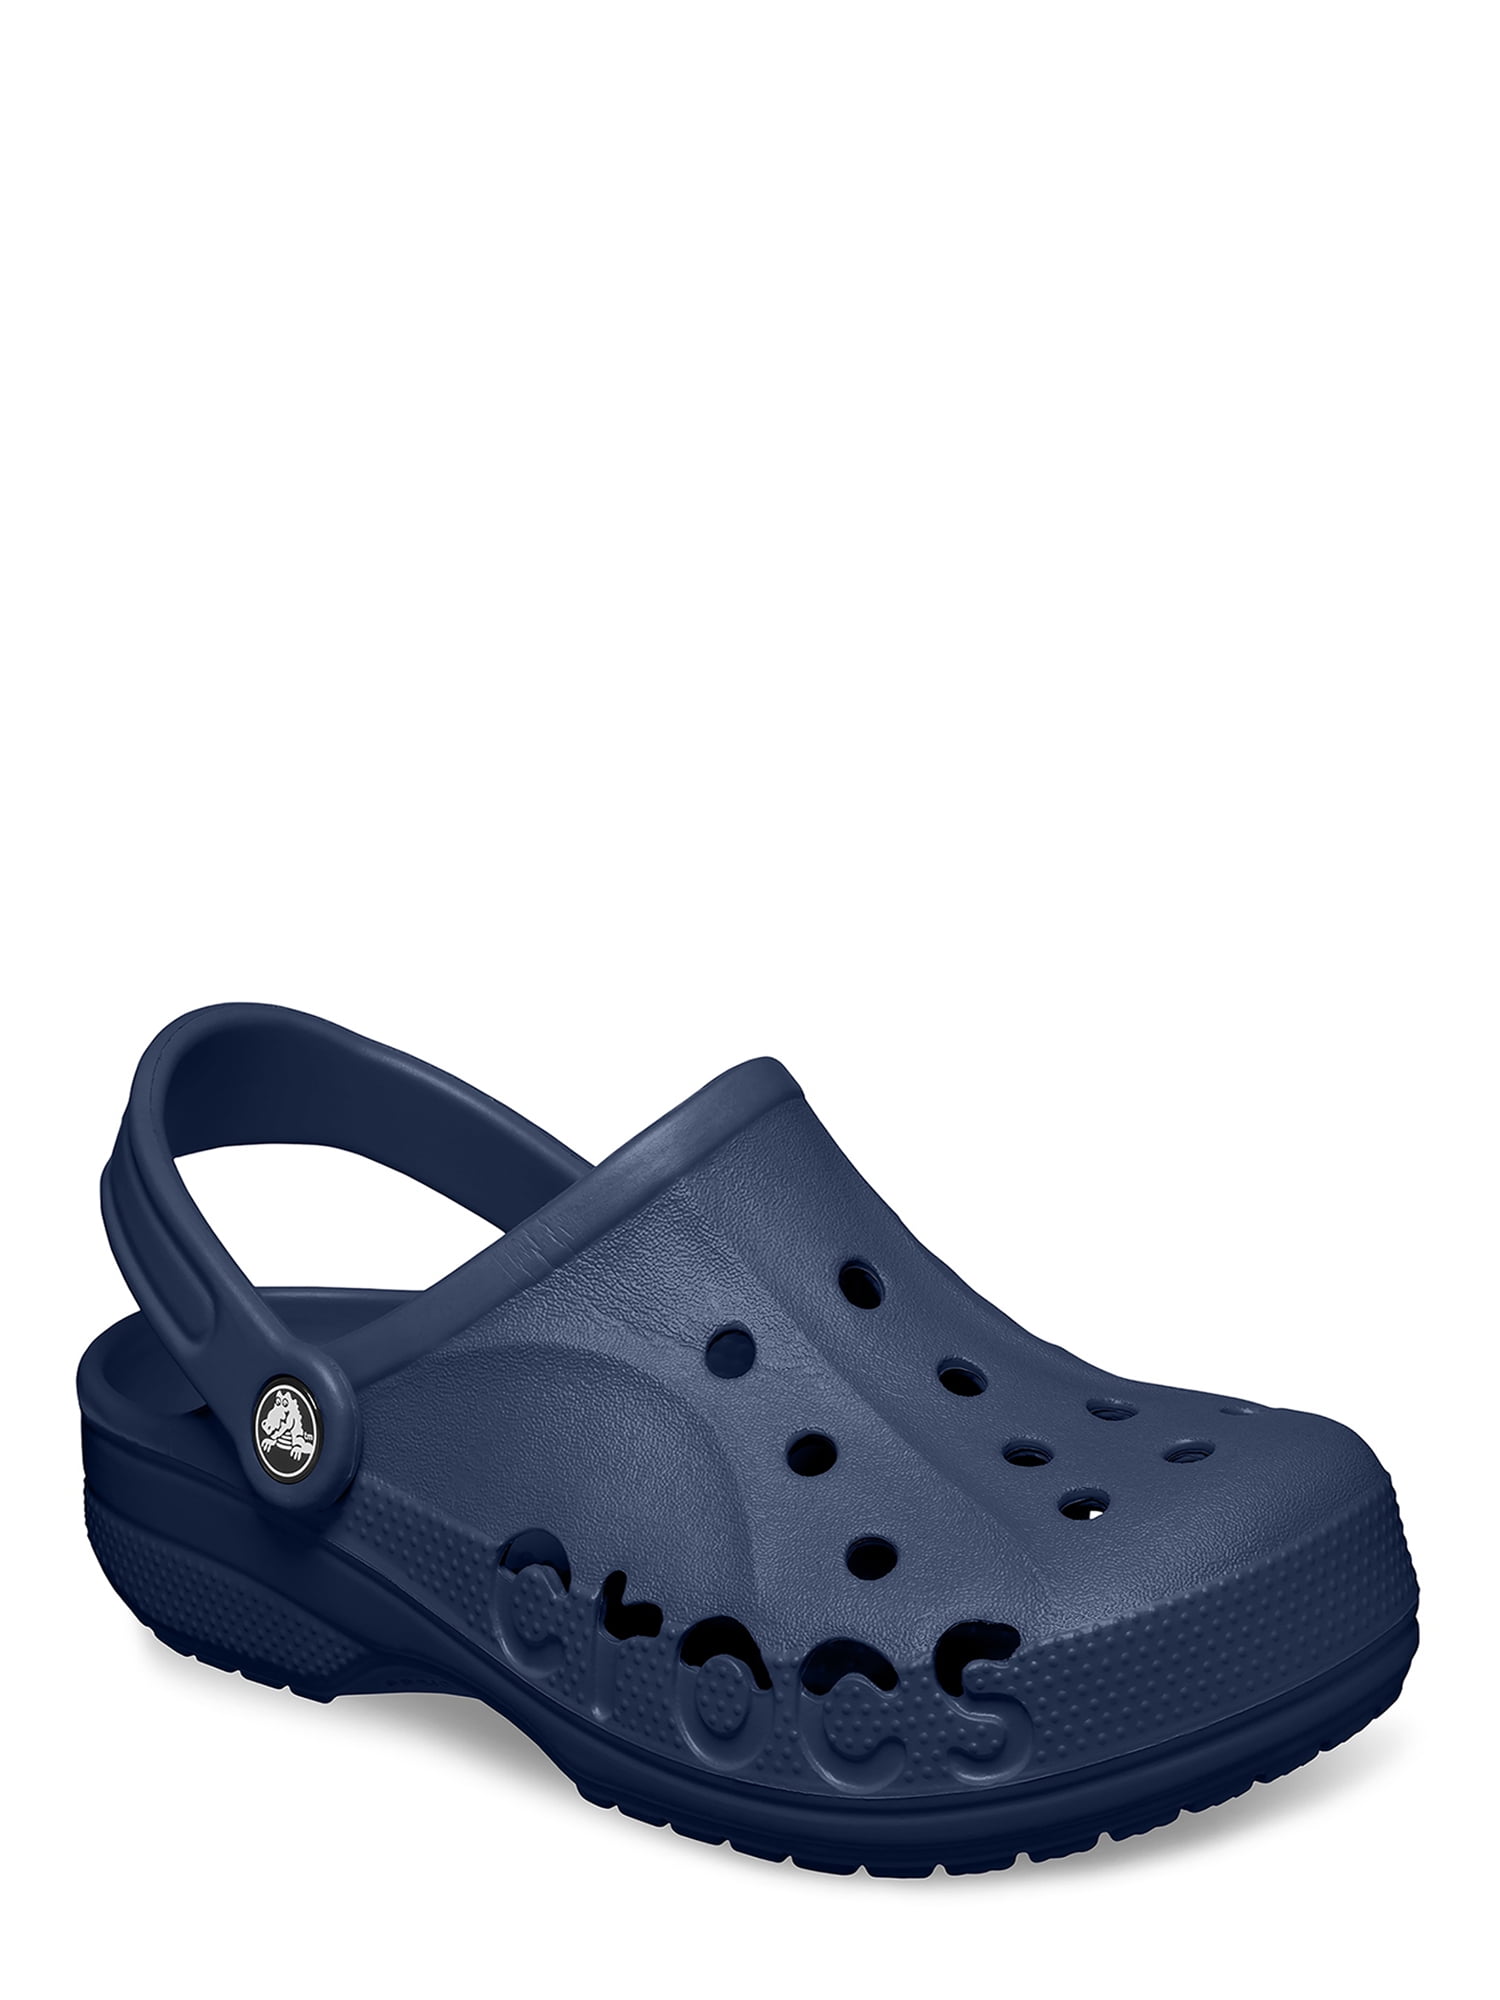 Crocs Unisex Baya Sandals - Walmart.com